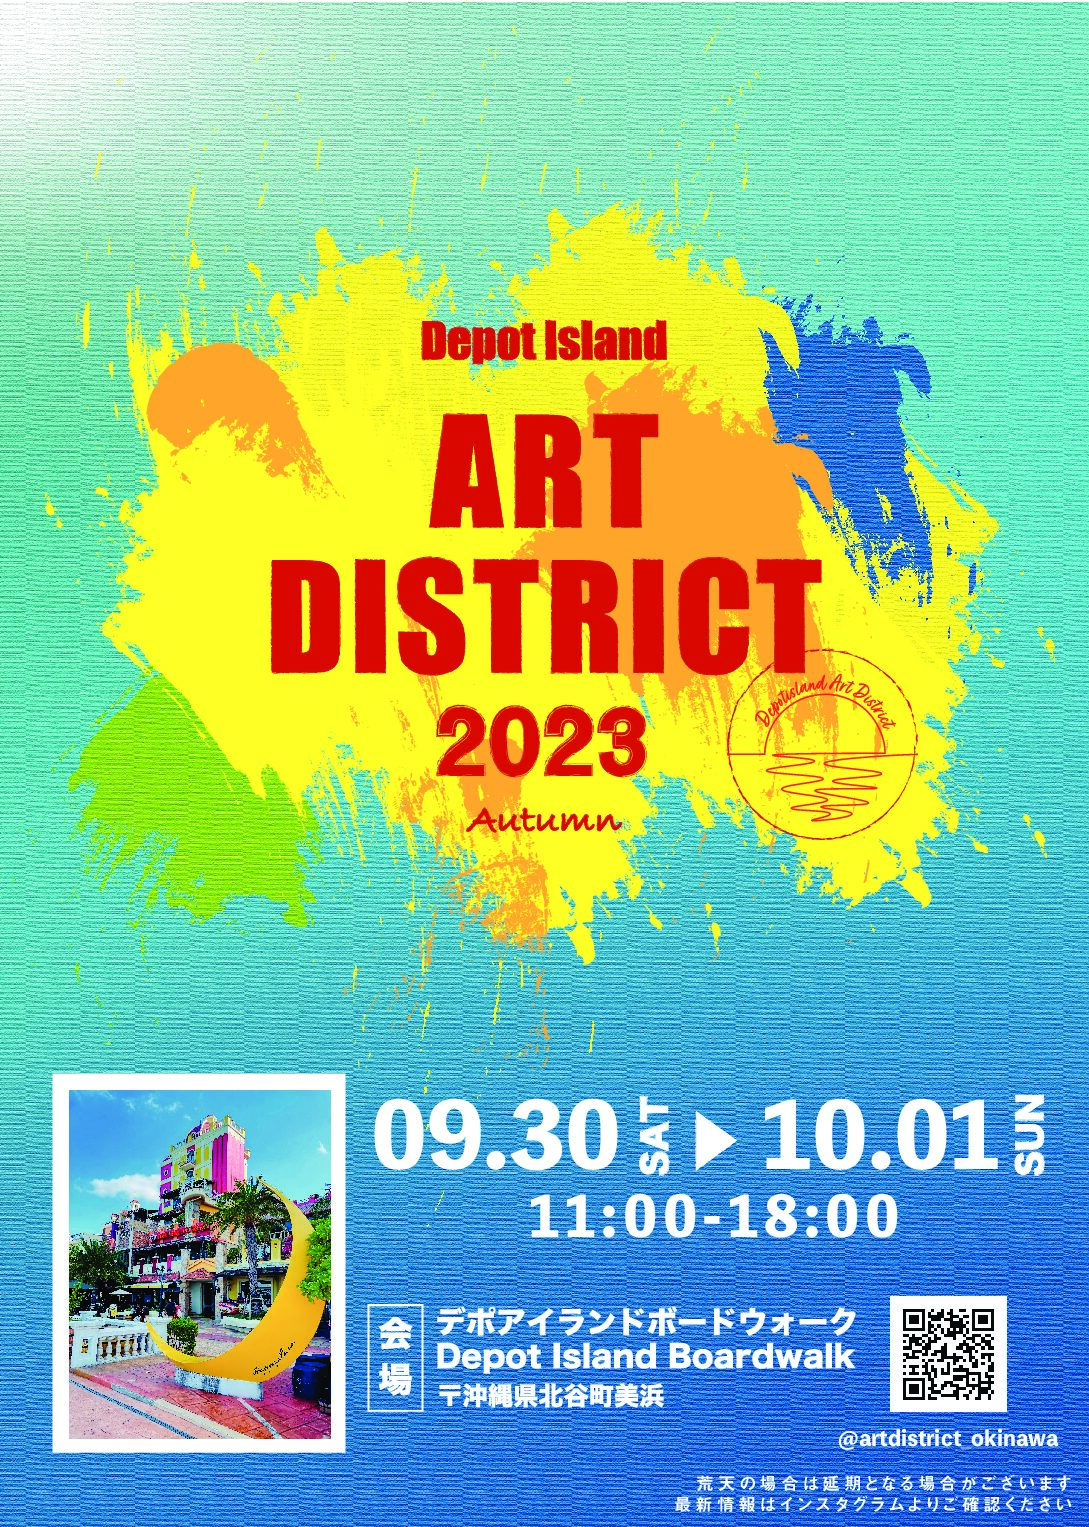 ART DISTRICT 2023 Autumn